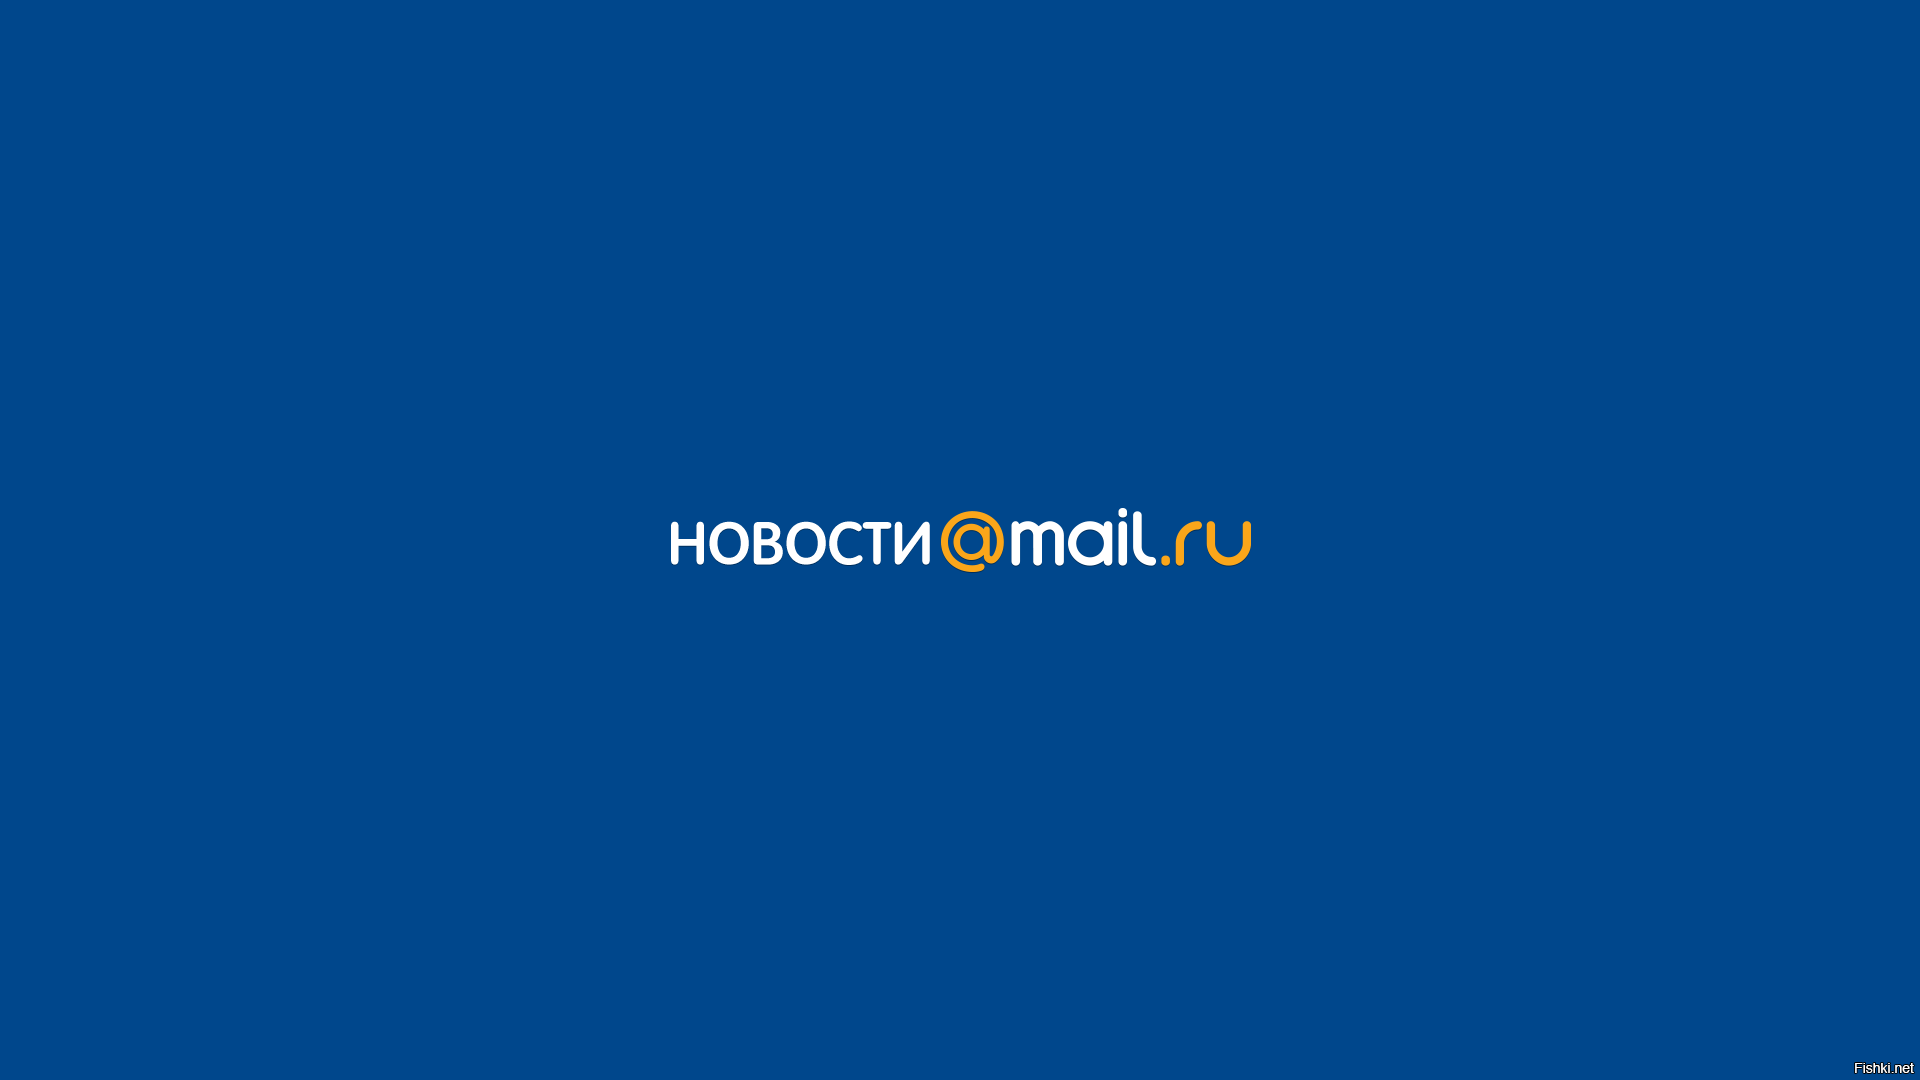 Making mail ru. Майл новости. Почта mail.ru новости. Лого новости майл ру.